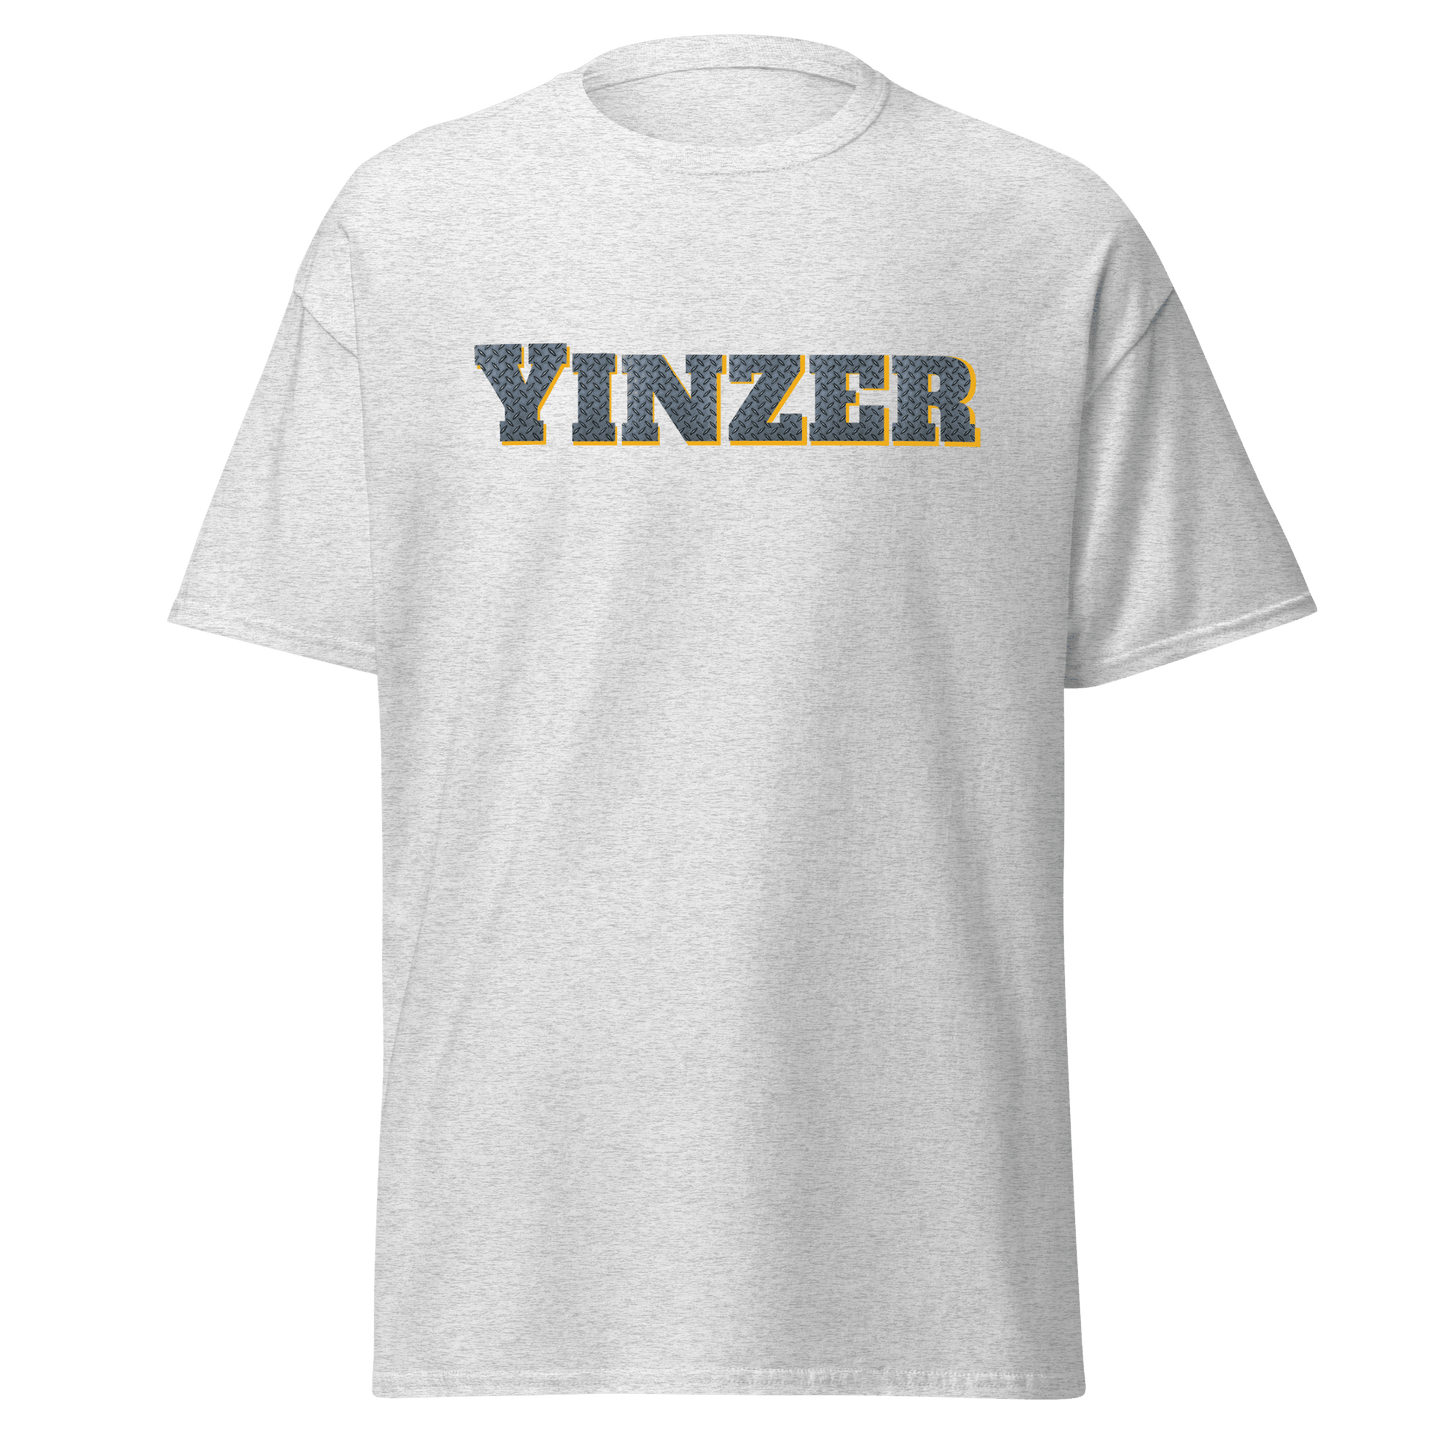 Steel Yinzer T-Shirt - Burgh Proud Yinzergear Ash S 